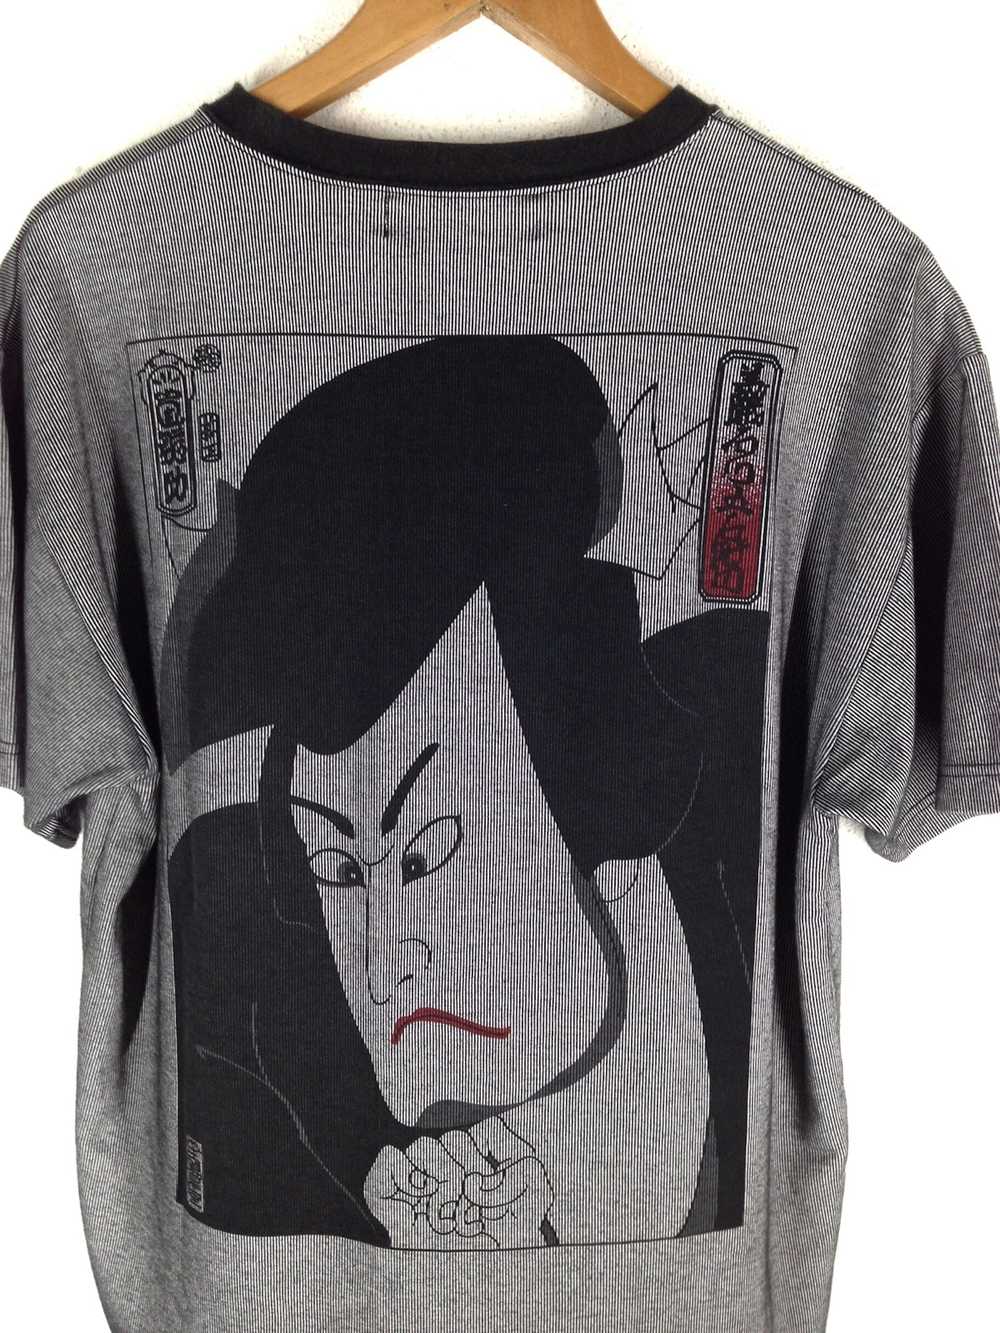 Japanese Brand Japanese Brand tshirts - image 3